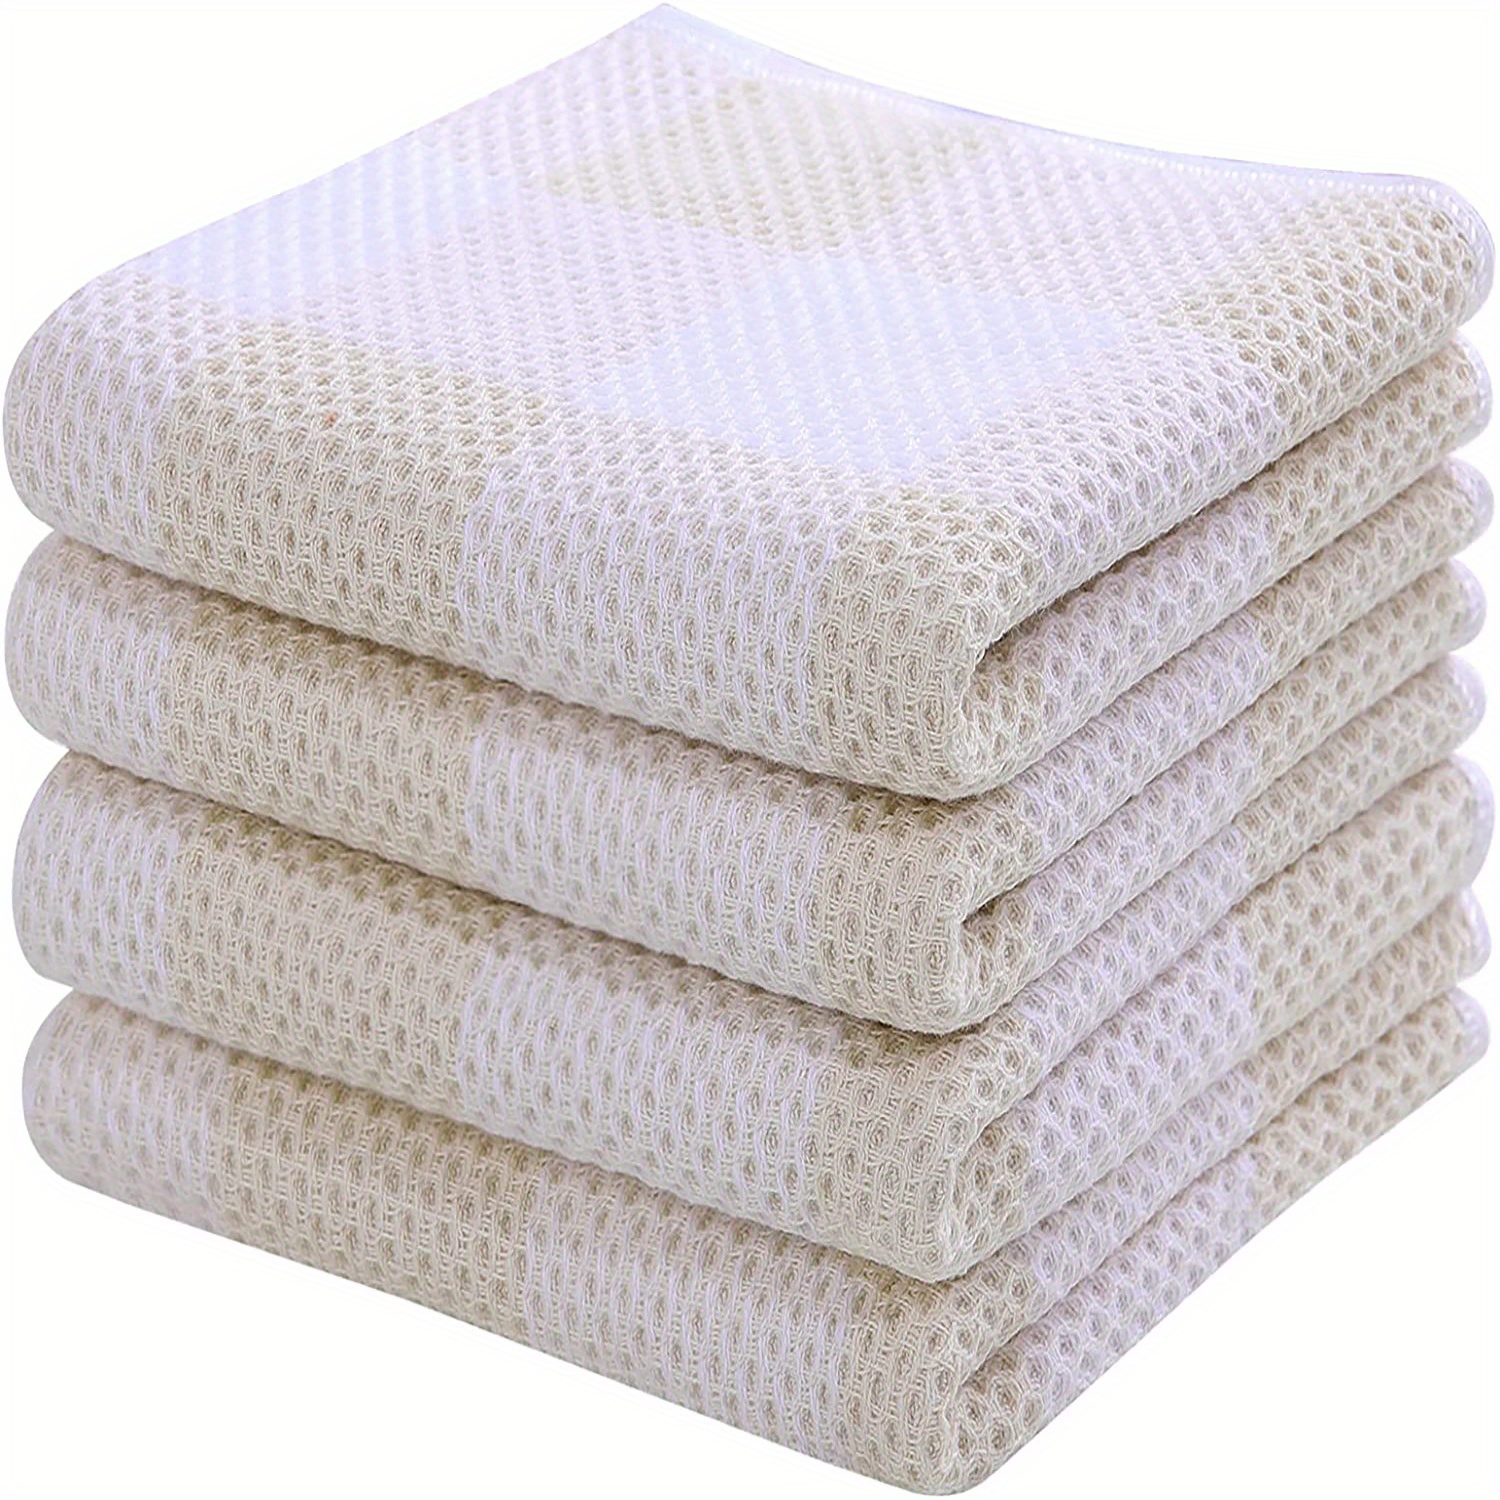 Check Plaid Towels 100% Cotton Bath Towels Hand Towels Super Soft and  Absorbent